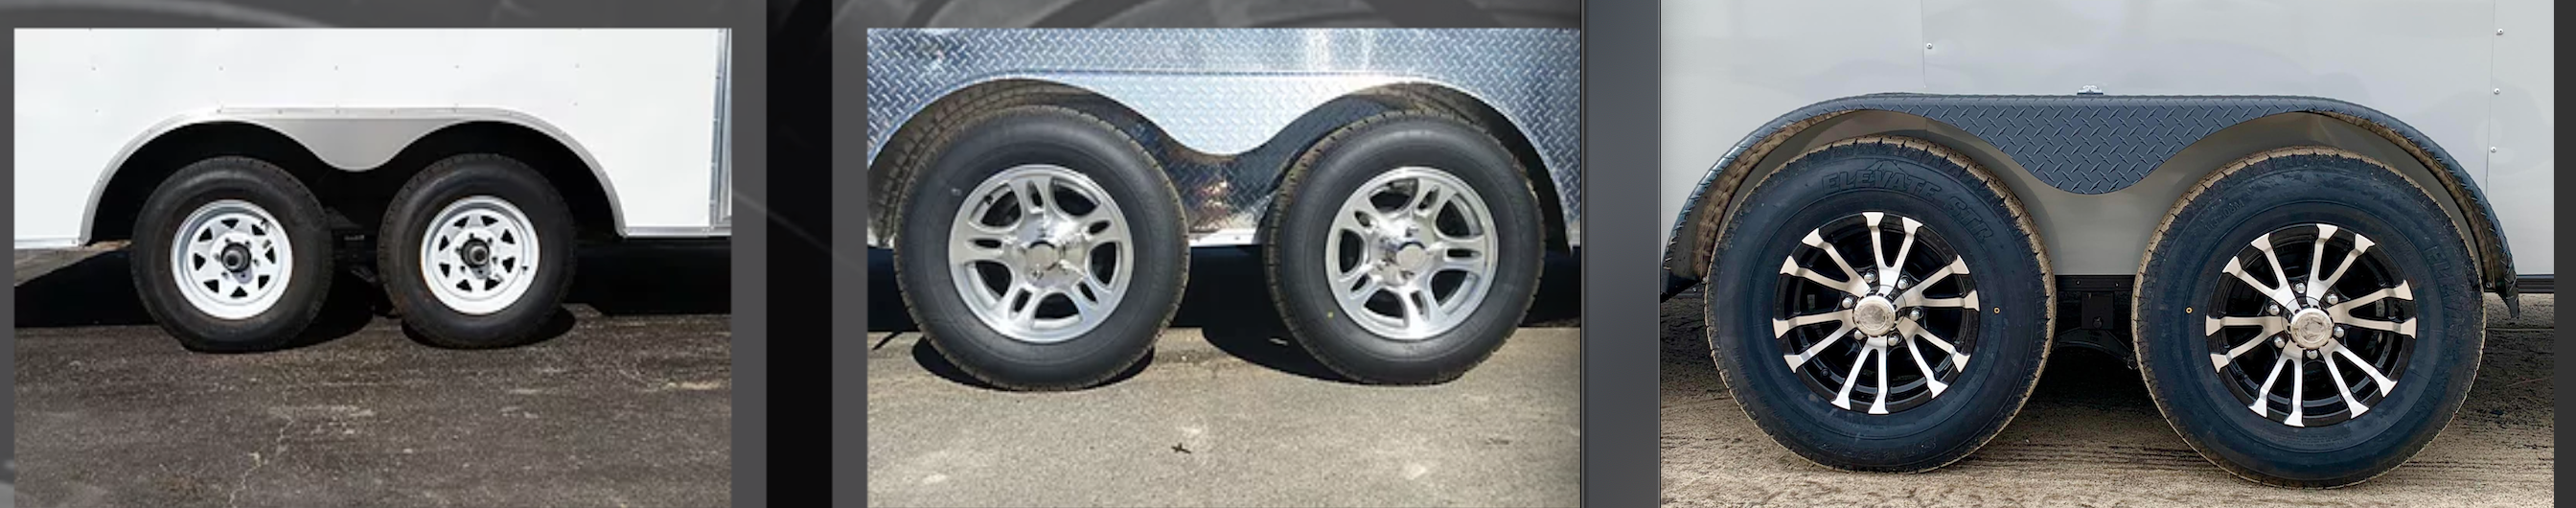 enclosed cargo trailer - 3 tire options